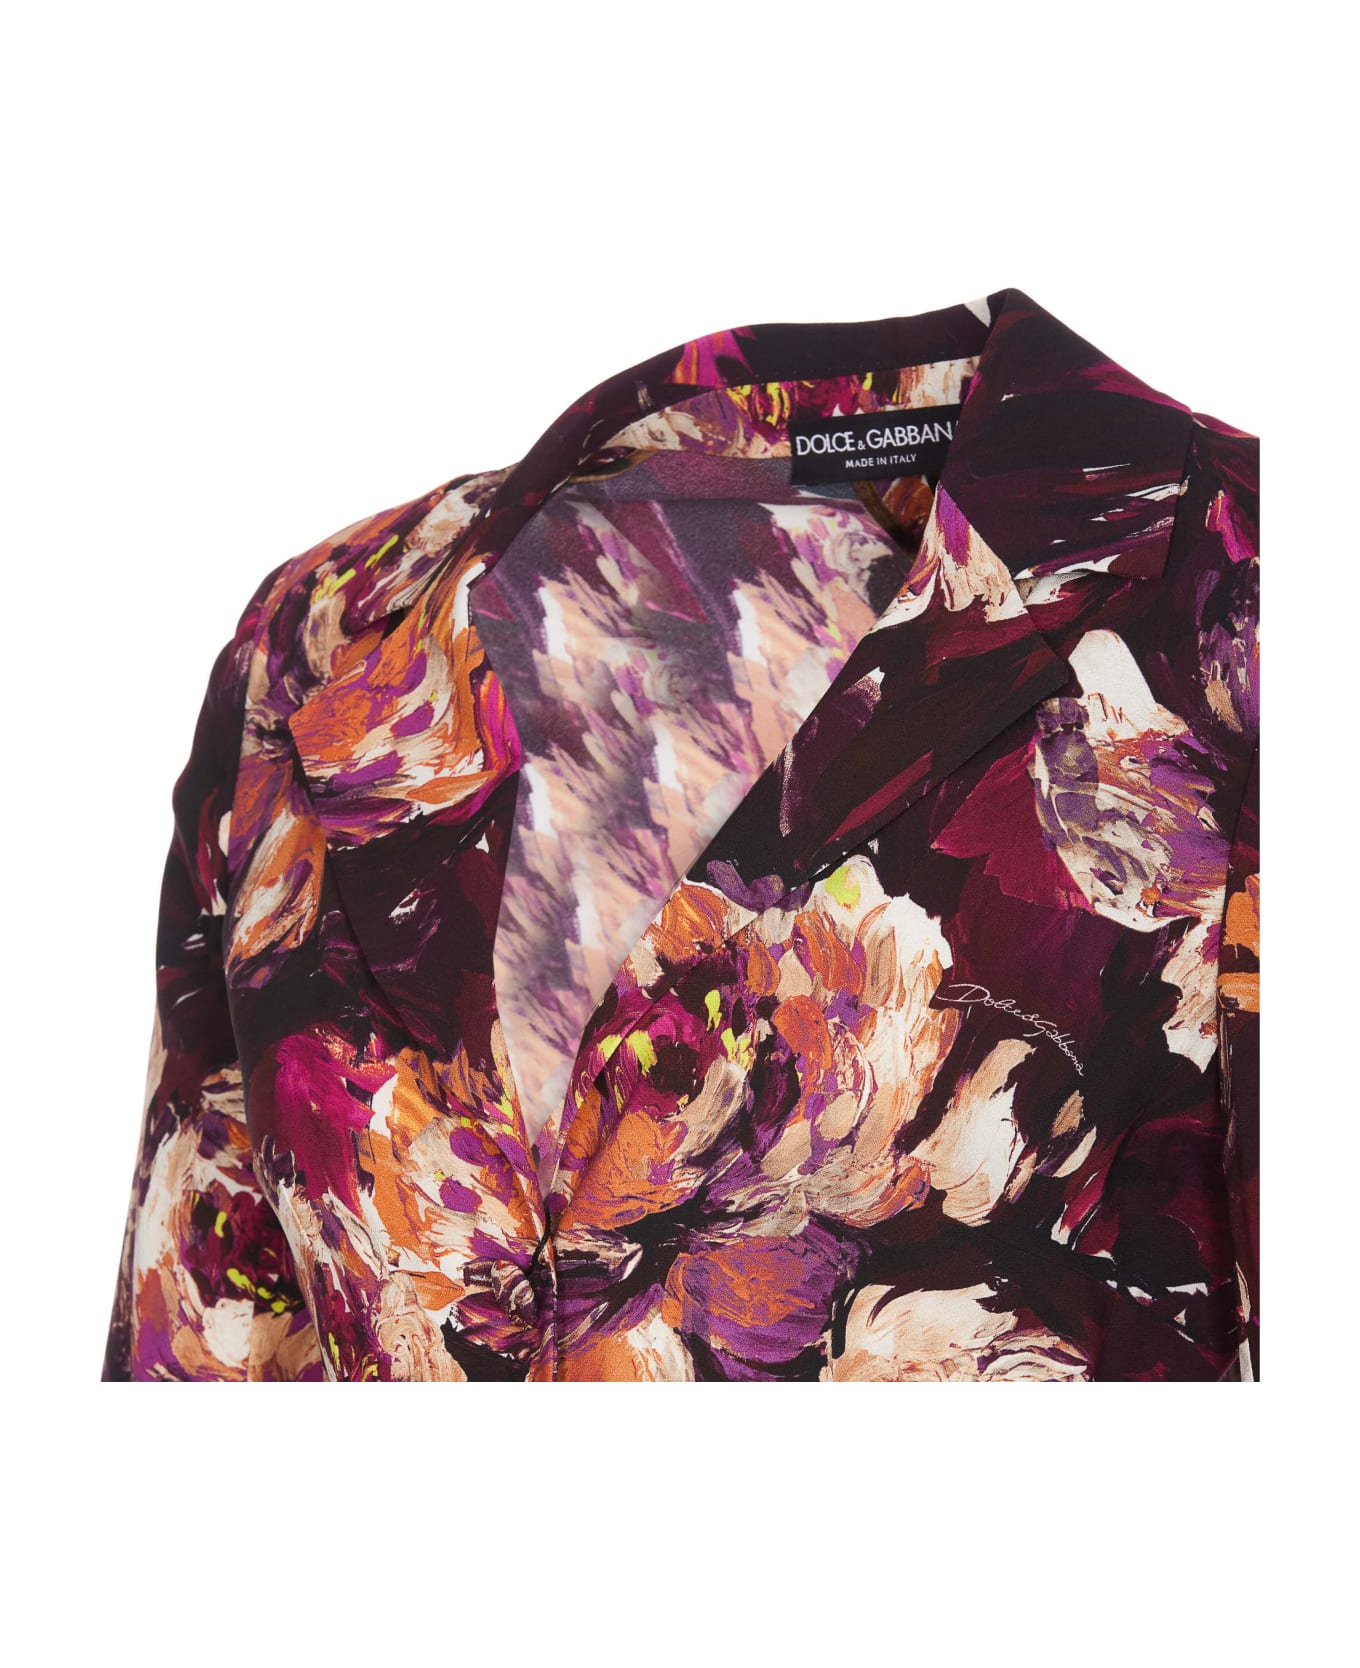 Dolce & Gabbana Peony Print Jacket - Multicolor ブレザー